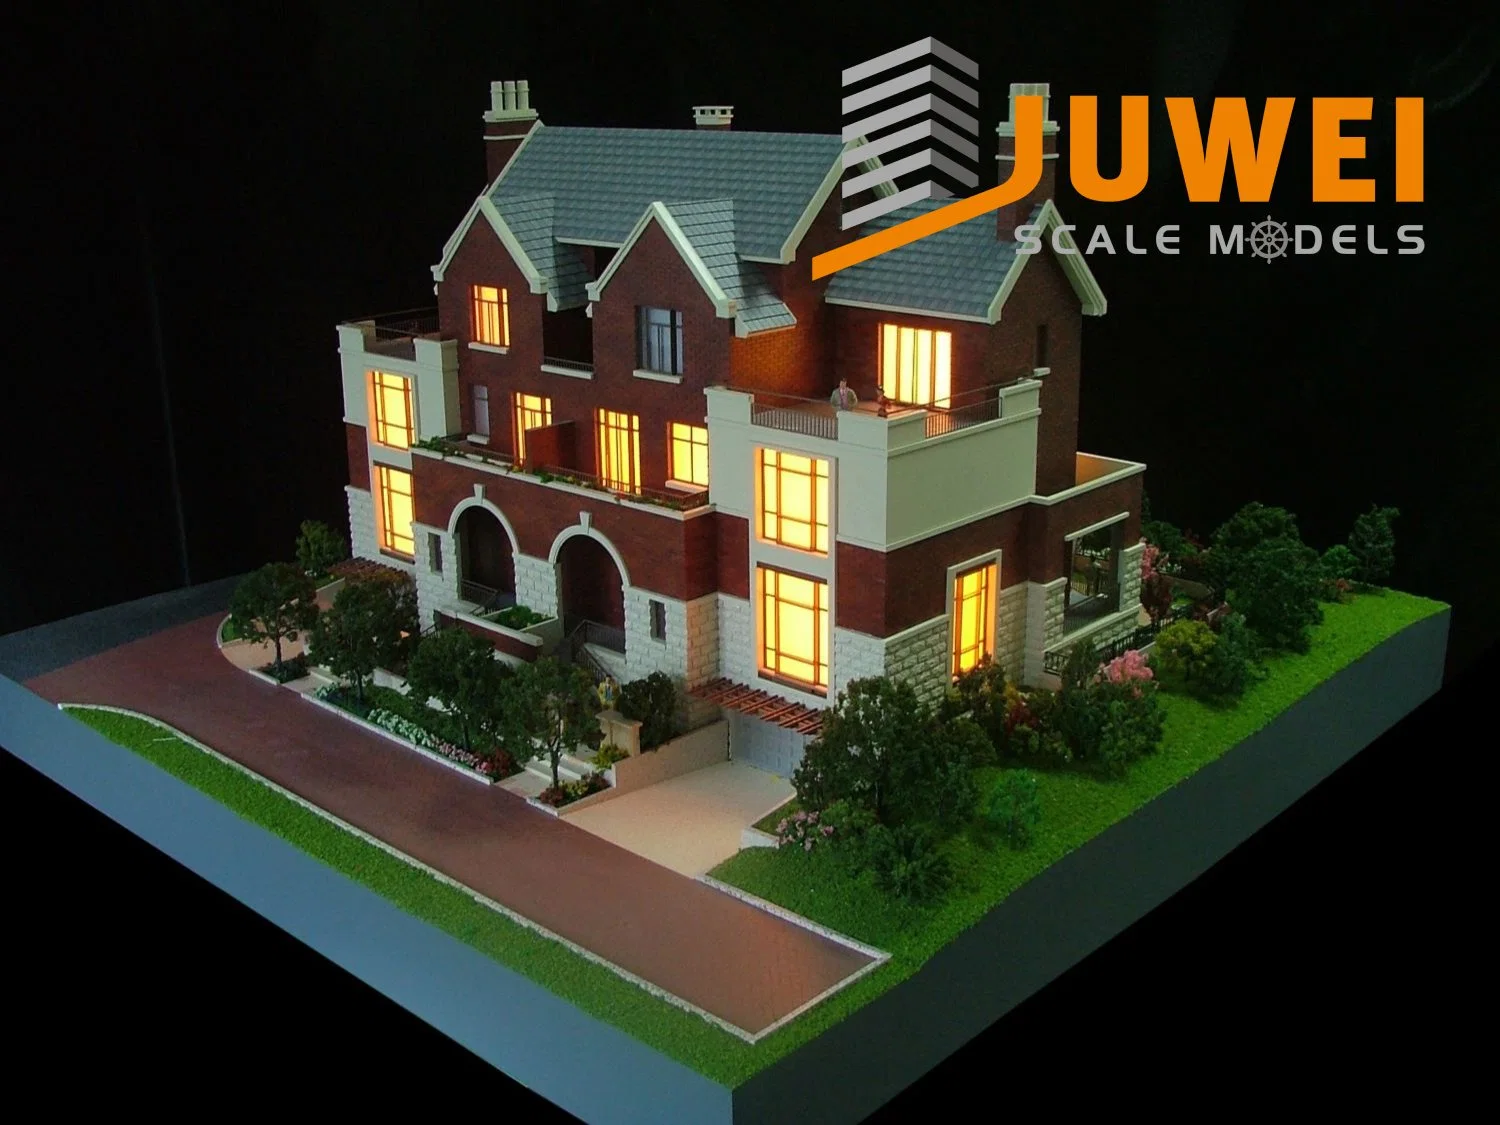 Residential Villa Building Model with Landscape Rendering for Display (JW-138)